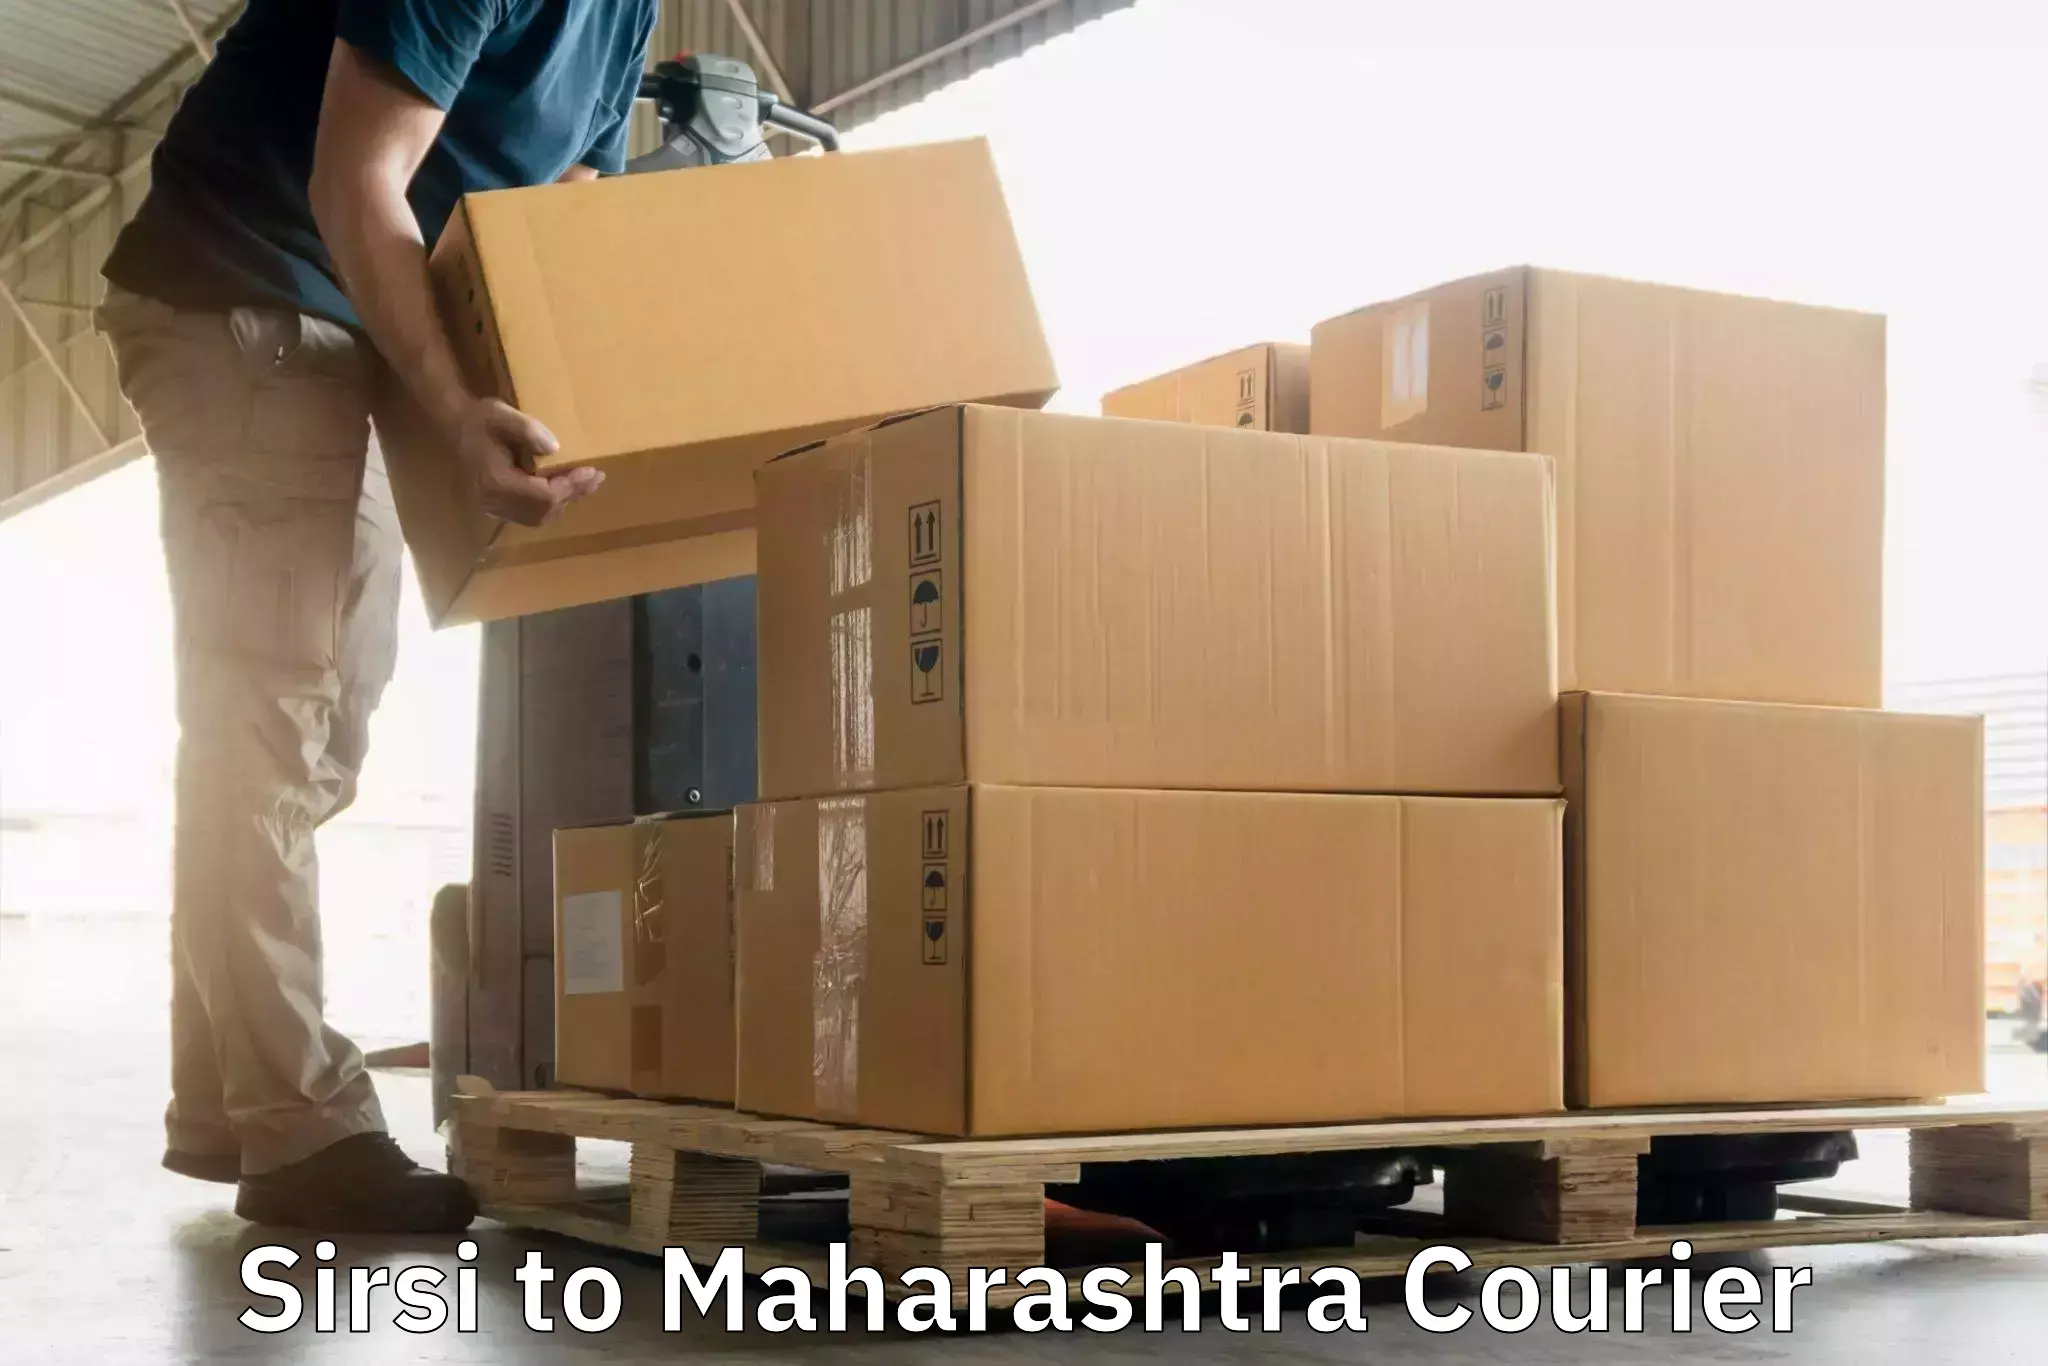 24-hour courier service Sirsi to Navi Mumbai